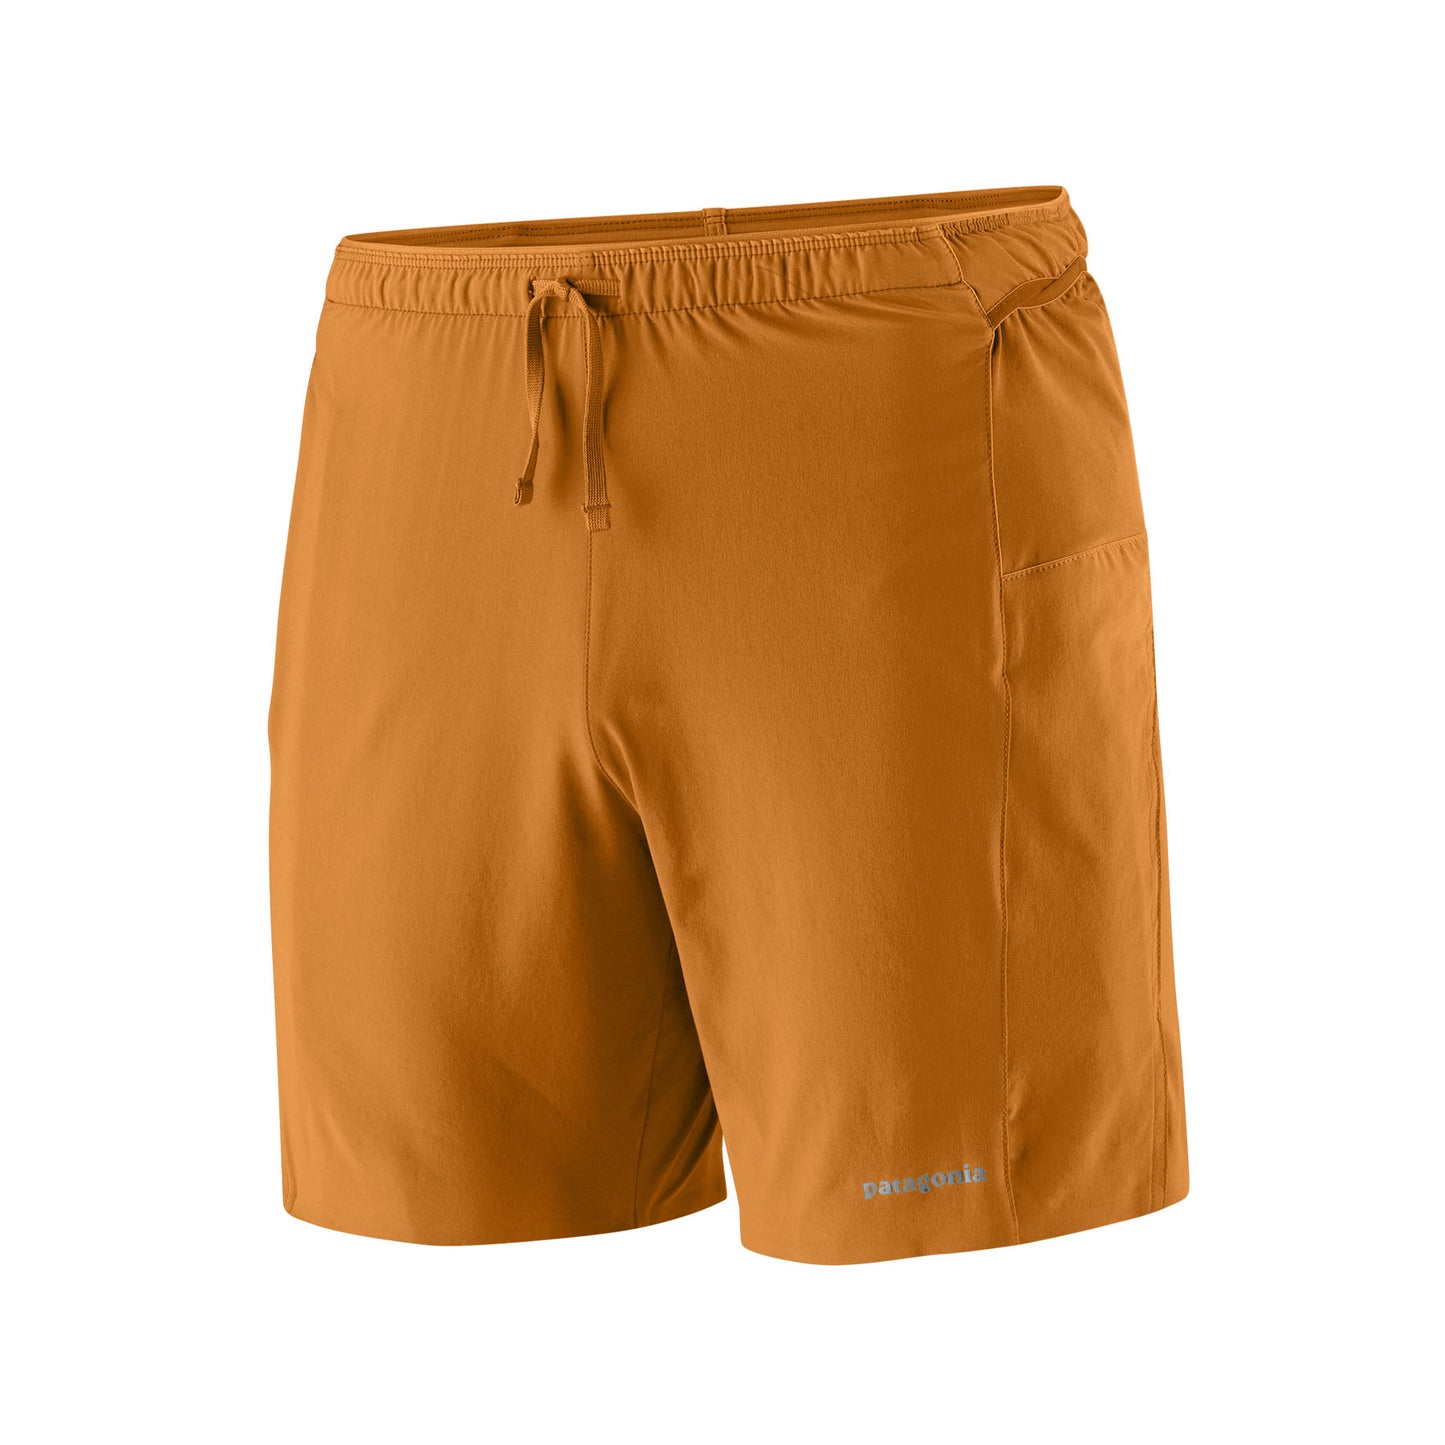 Patagonia®男款 Strider Pro Shorts - 7"